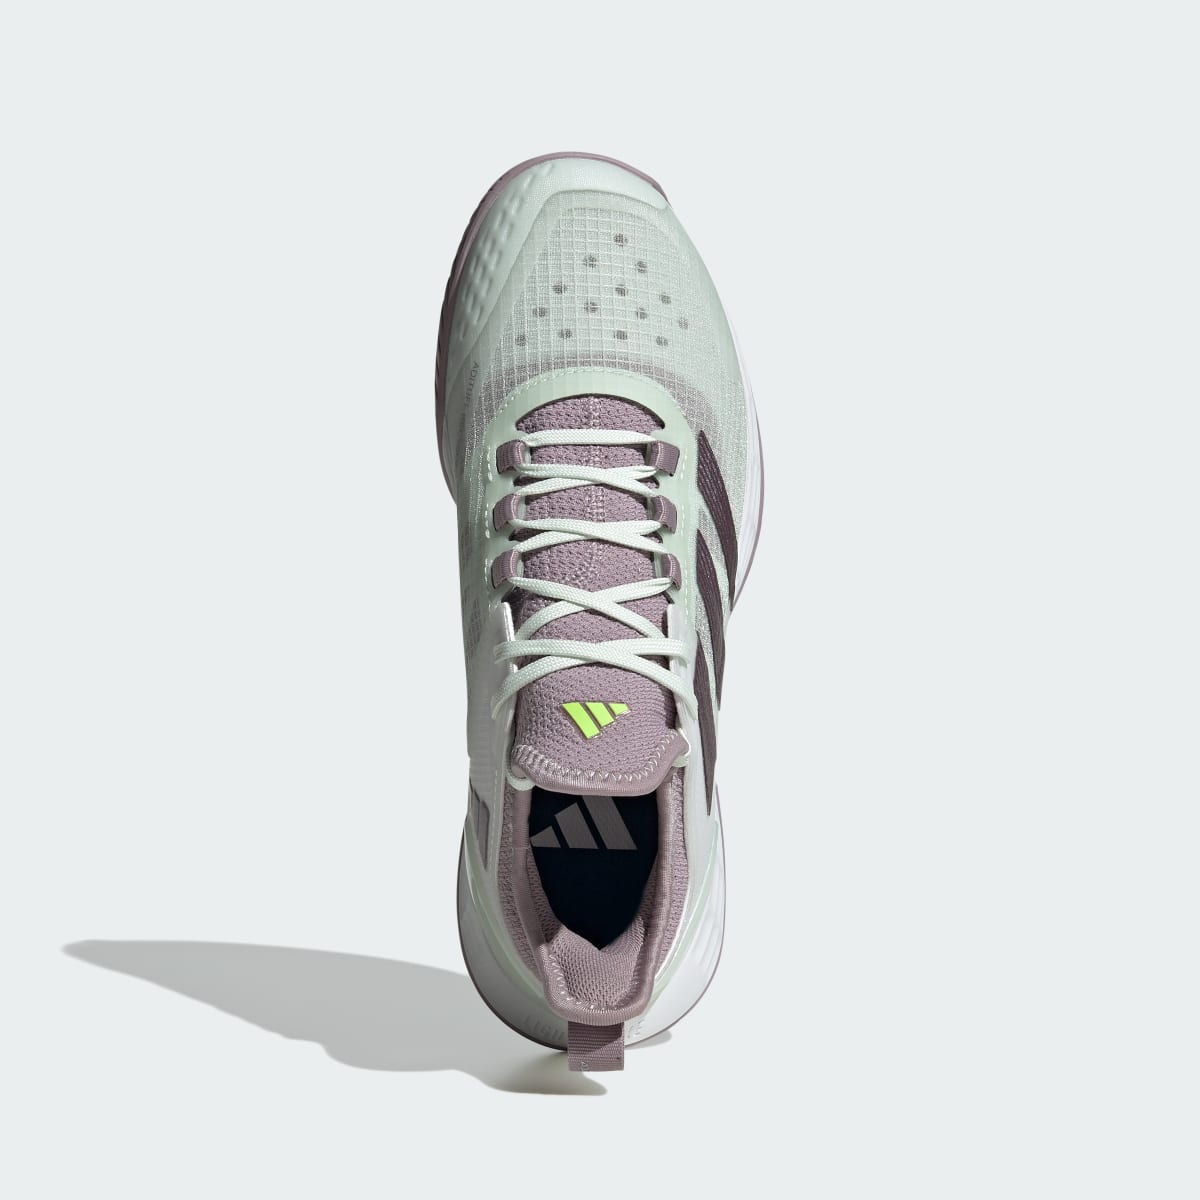 Adidas Scarpe da tennis adizero Ubersonic 4.1. 6